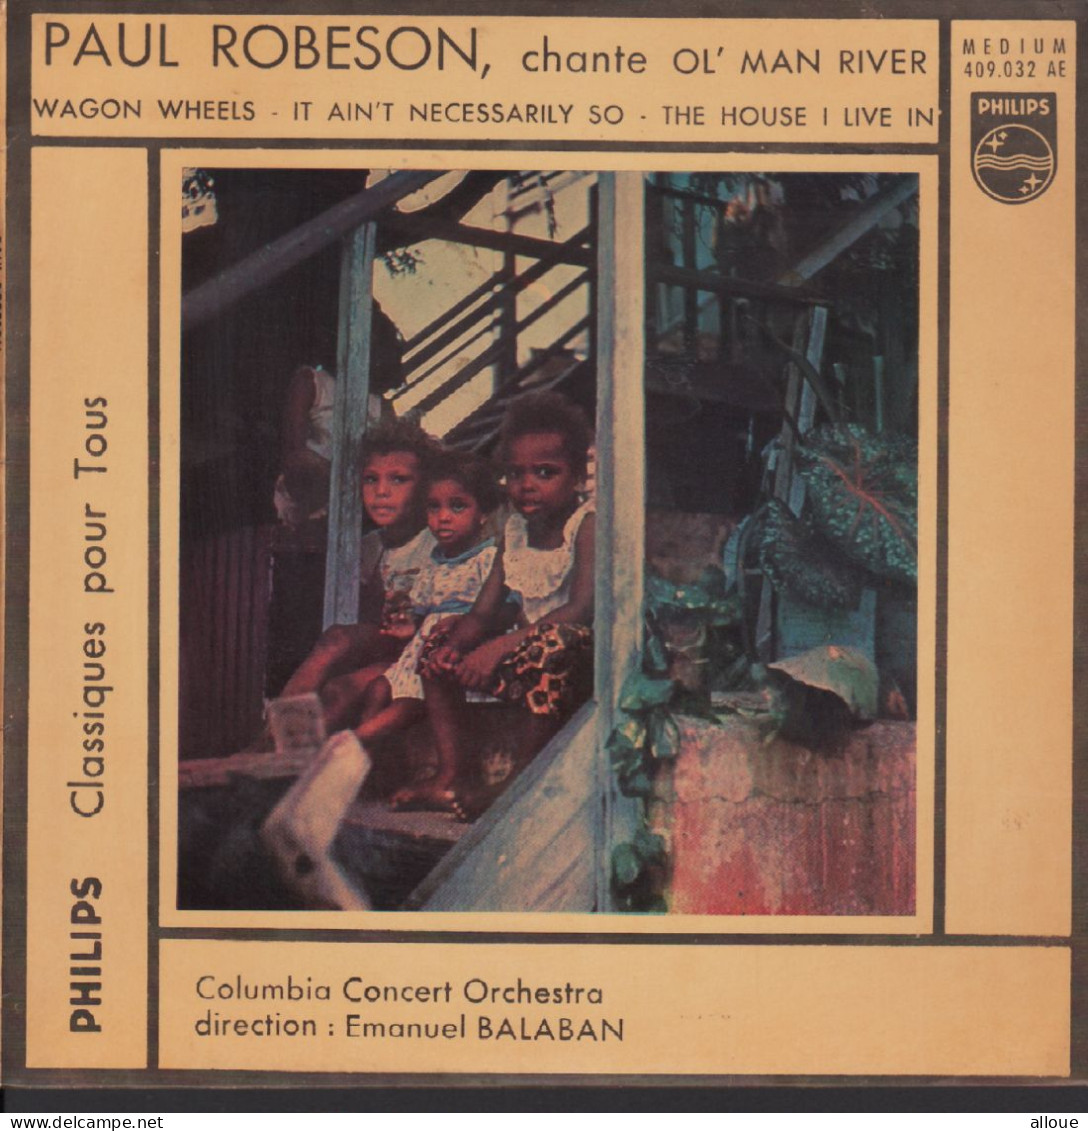 PAUL ROBESON - FR EP - OL' MAN RIVER + 3 - Oper & Operette